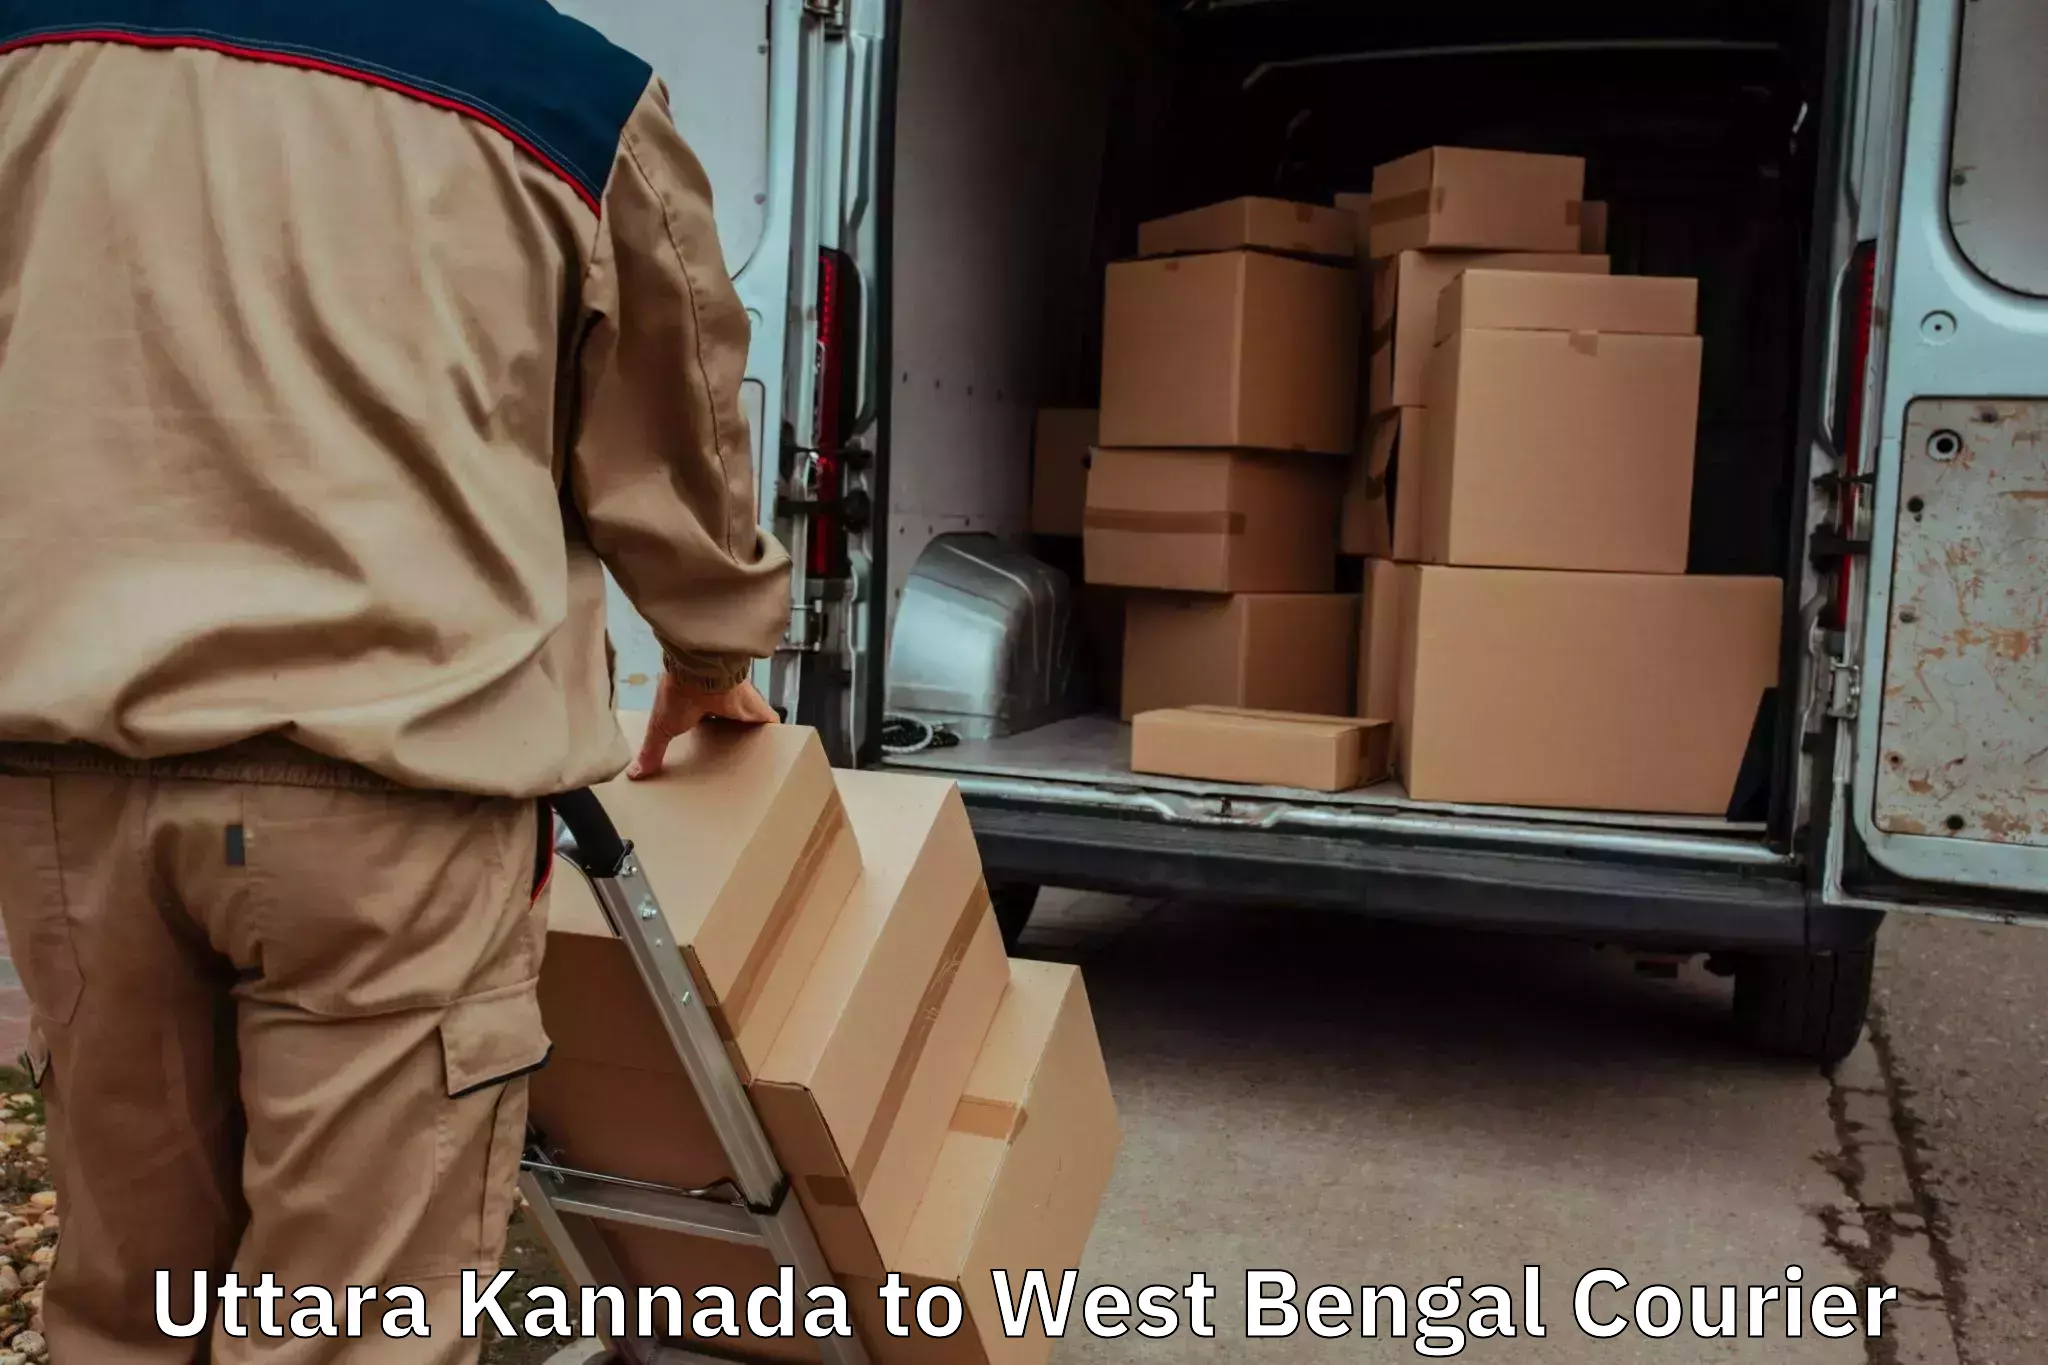 Professional moving company Uttara Kannada to Chittaranjan